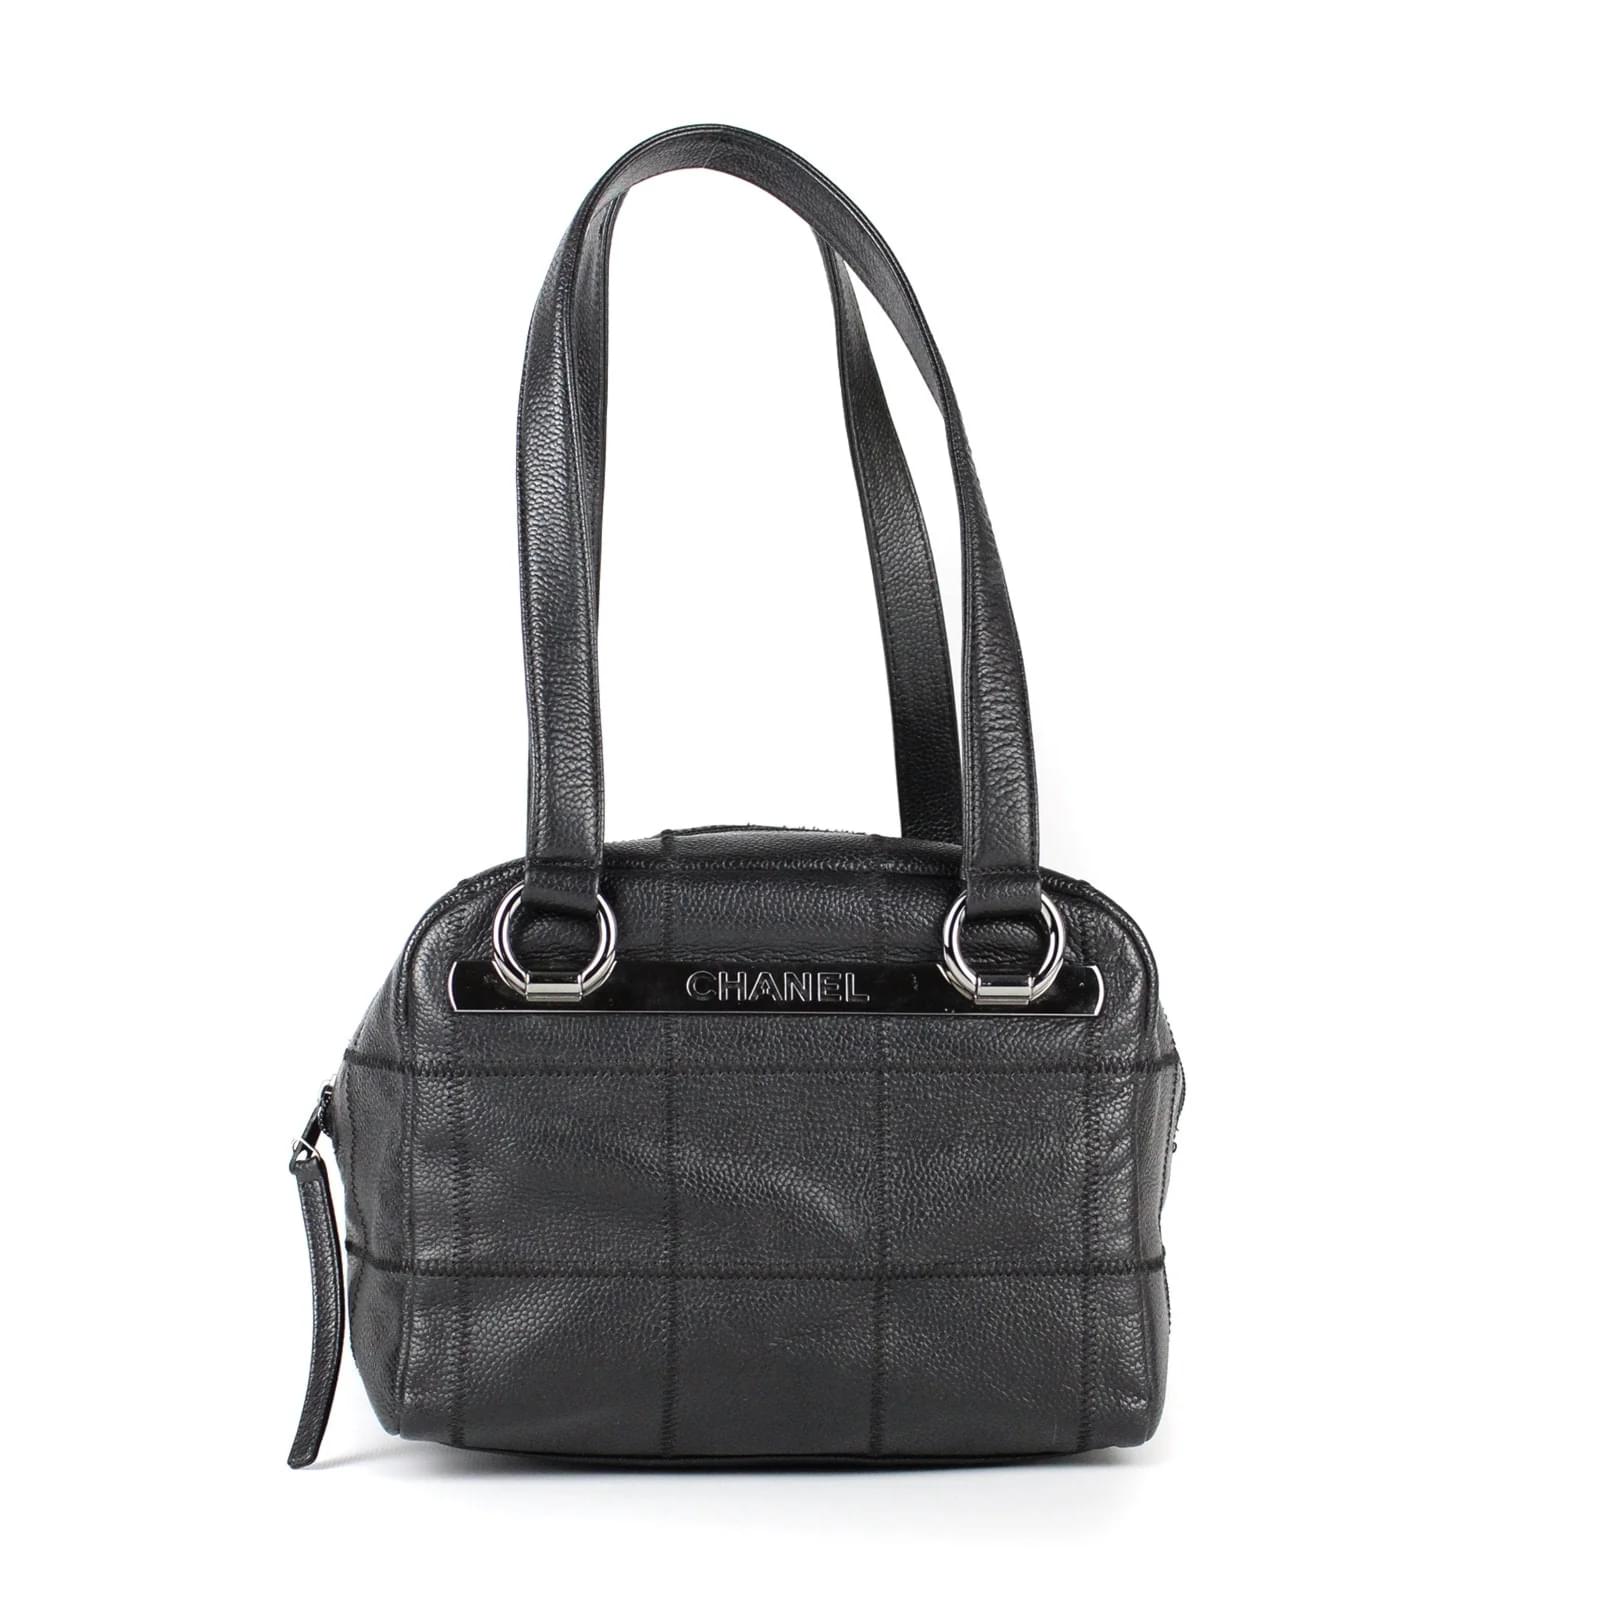 Misc Chanel Chanel Handbags Bowling Bag